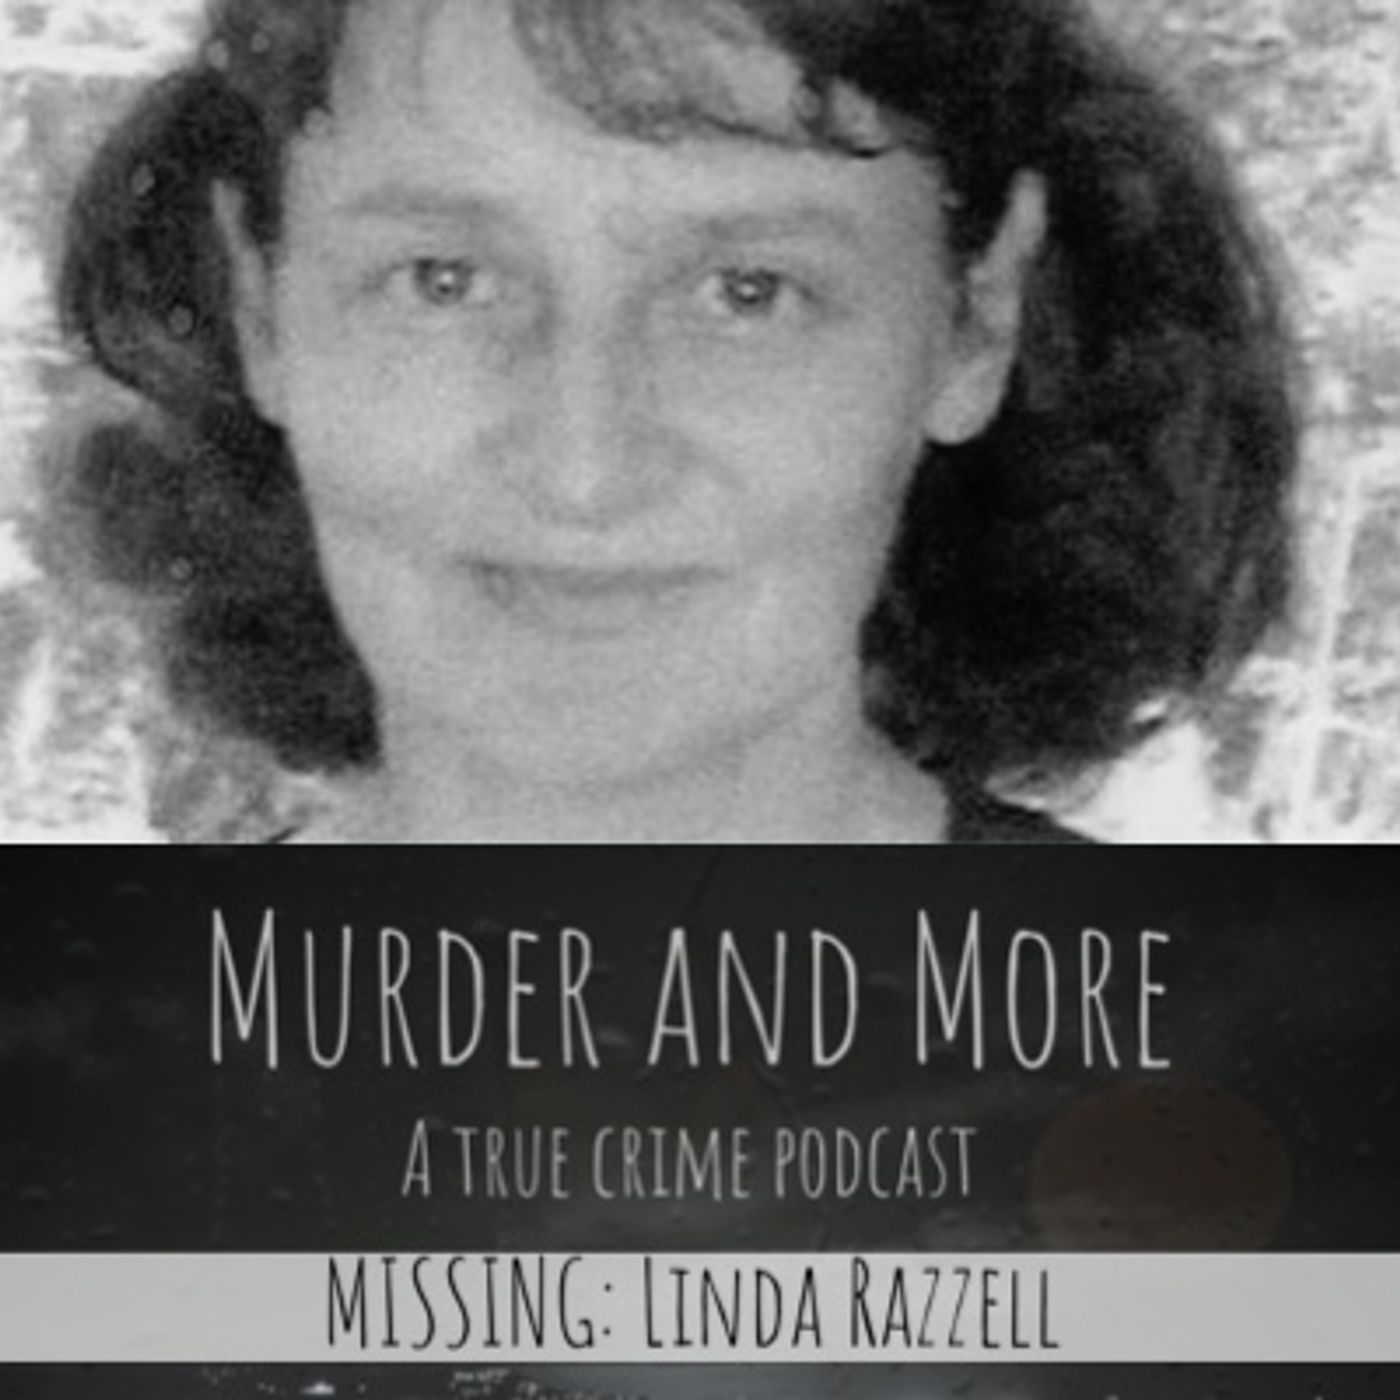 MISSING: Linda Razzell